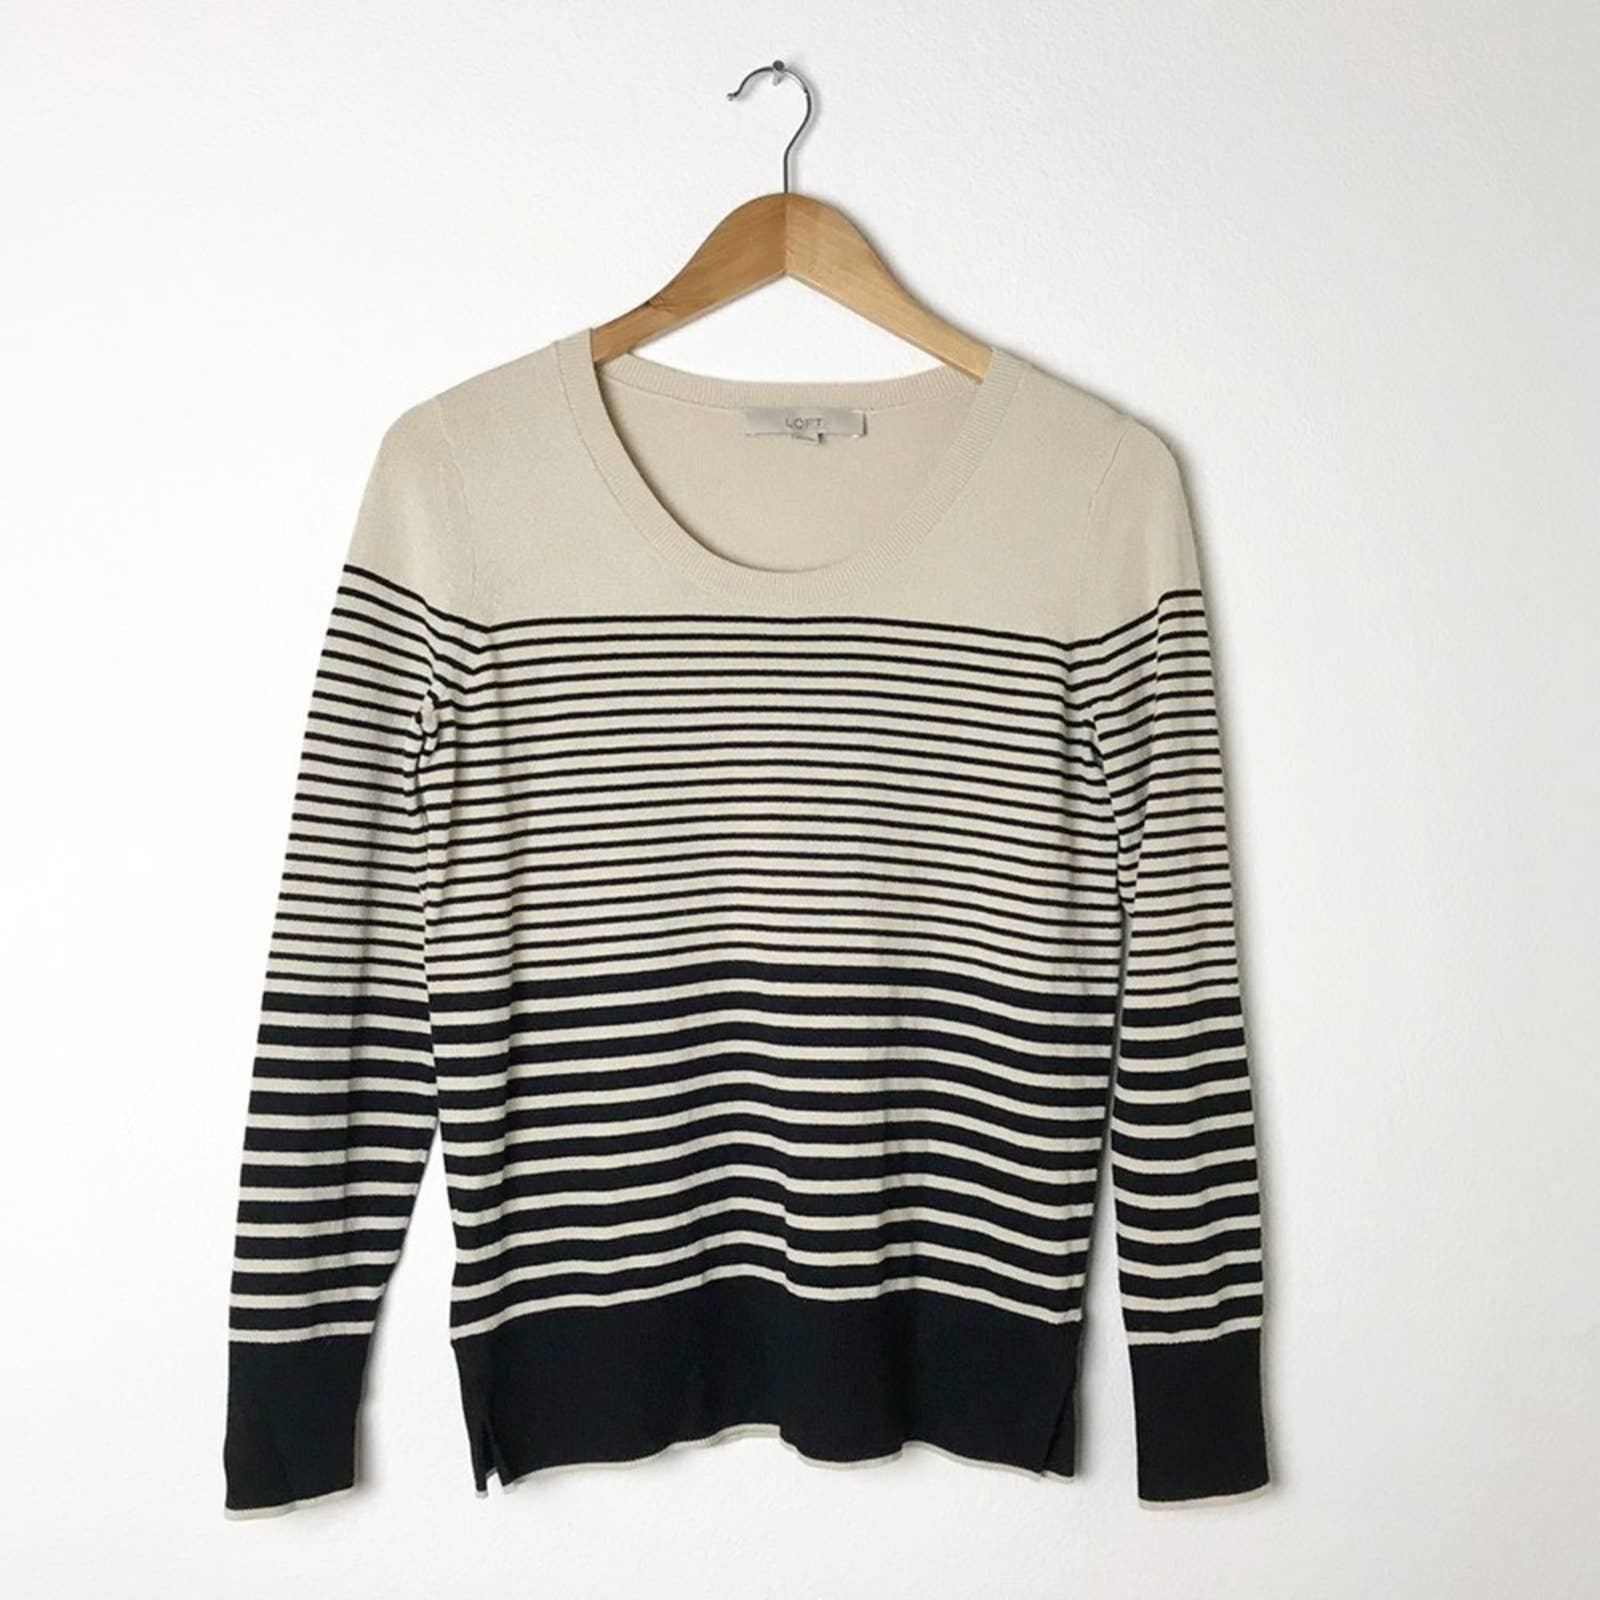 The Best Seller Ann Taylor LOFT Tan Black Striped Crew Sweater pBn415lsl online store